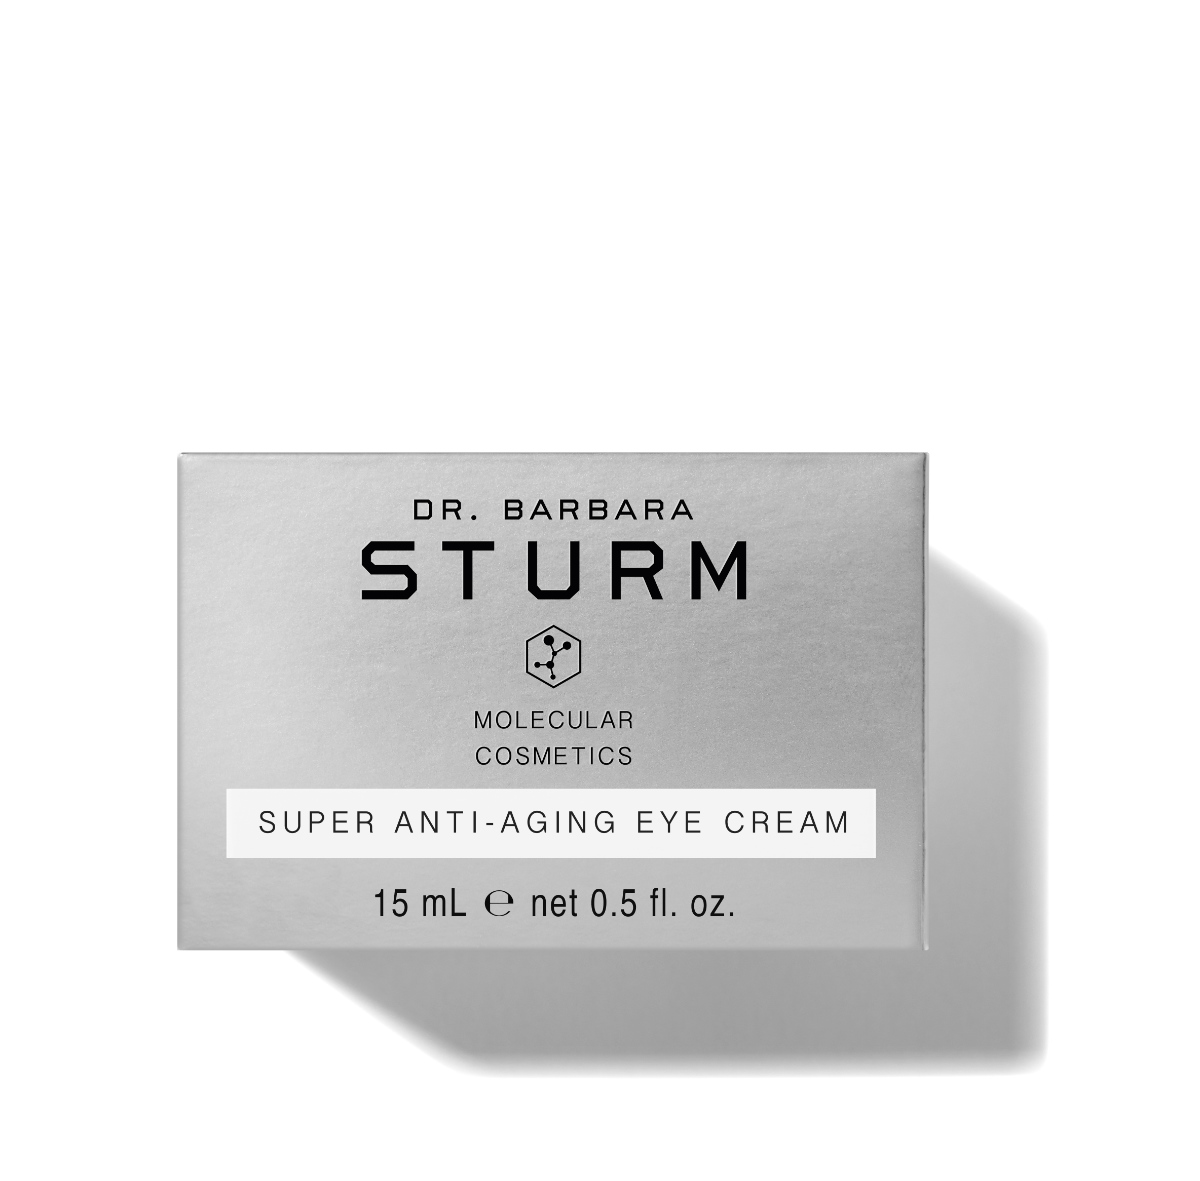 Introducing Dr. Barbara Sturm’s Super Anti-Aging Eye Cream